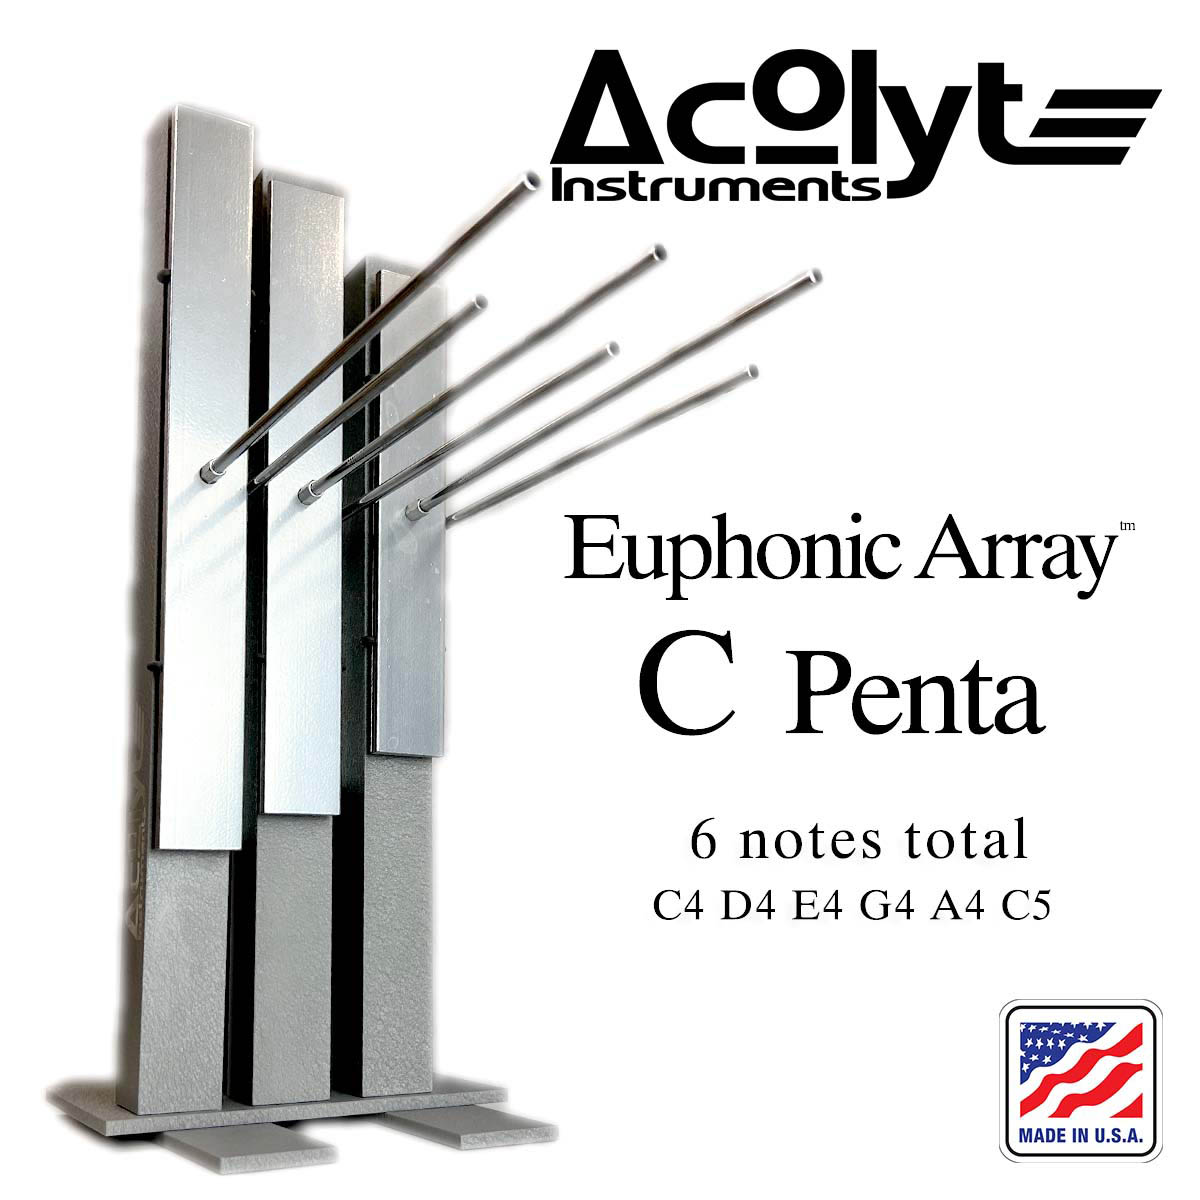 Acolyte Euphonic Array™ C Penta